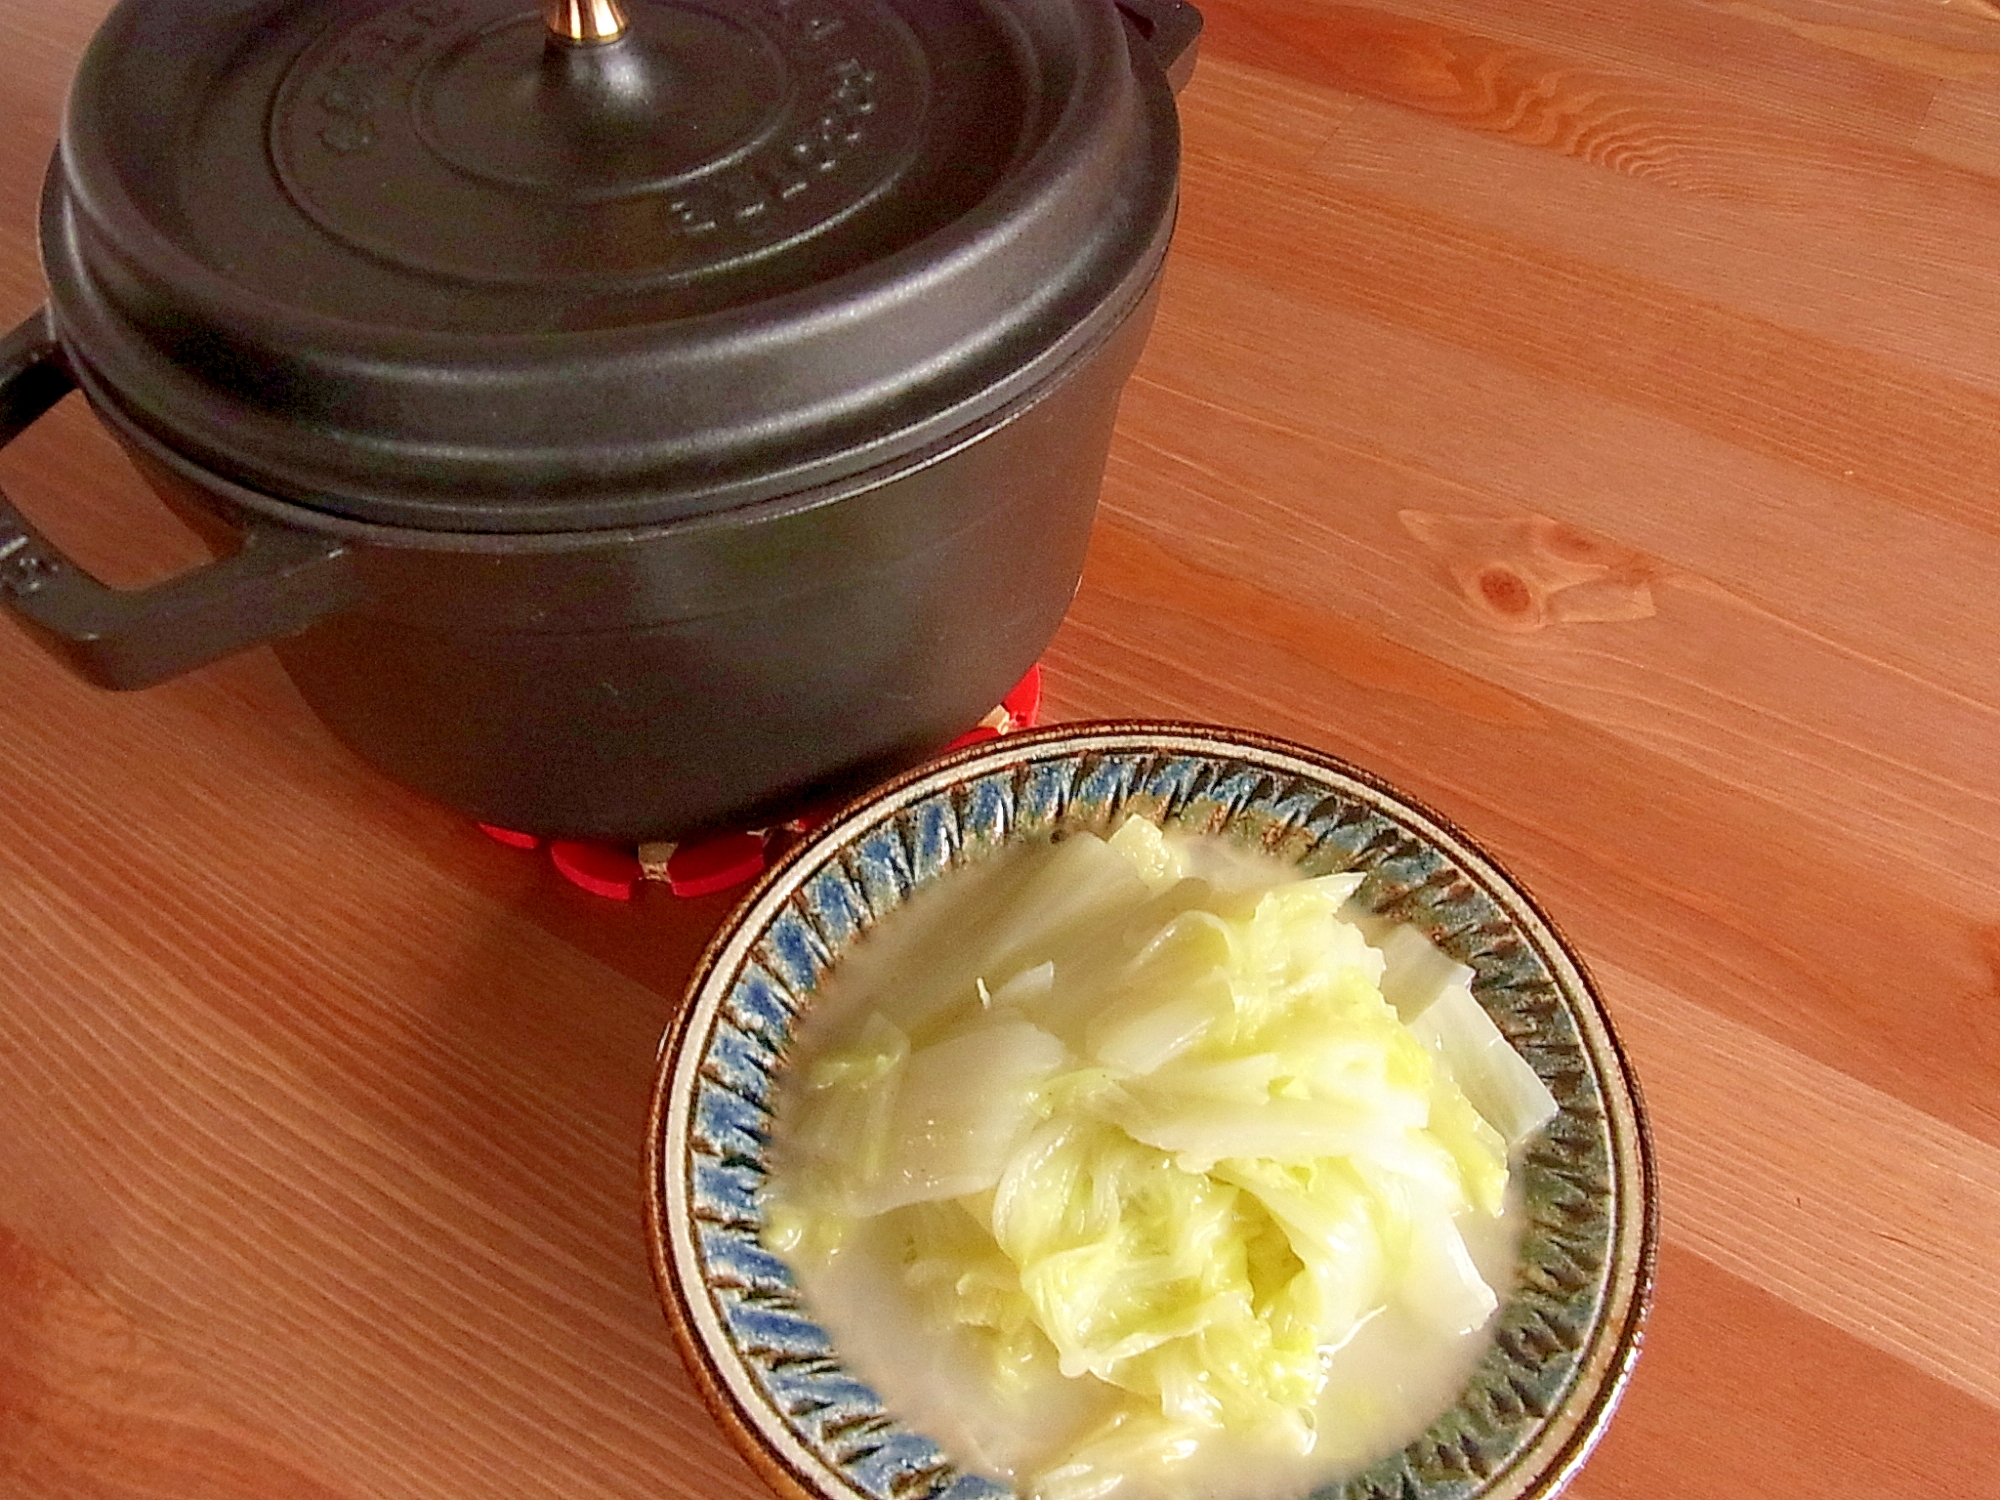 staub鍋で白菜の蒸し焼き柚子胡椒バター味